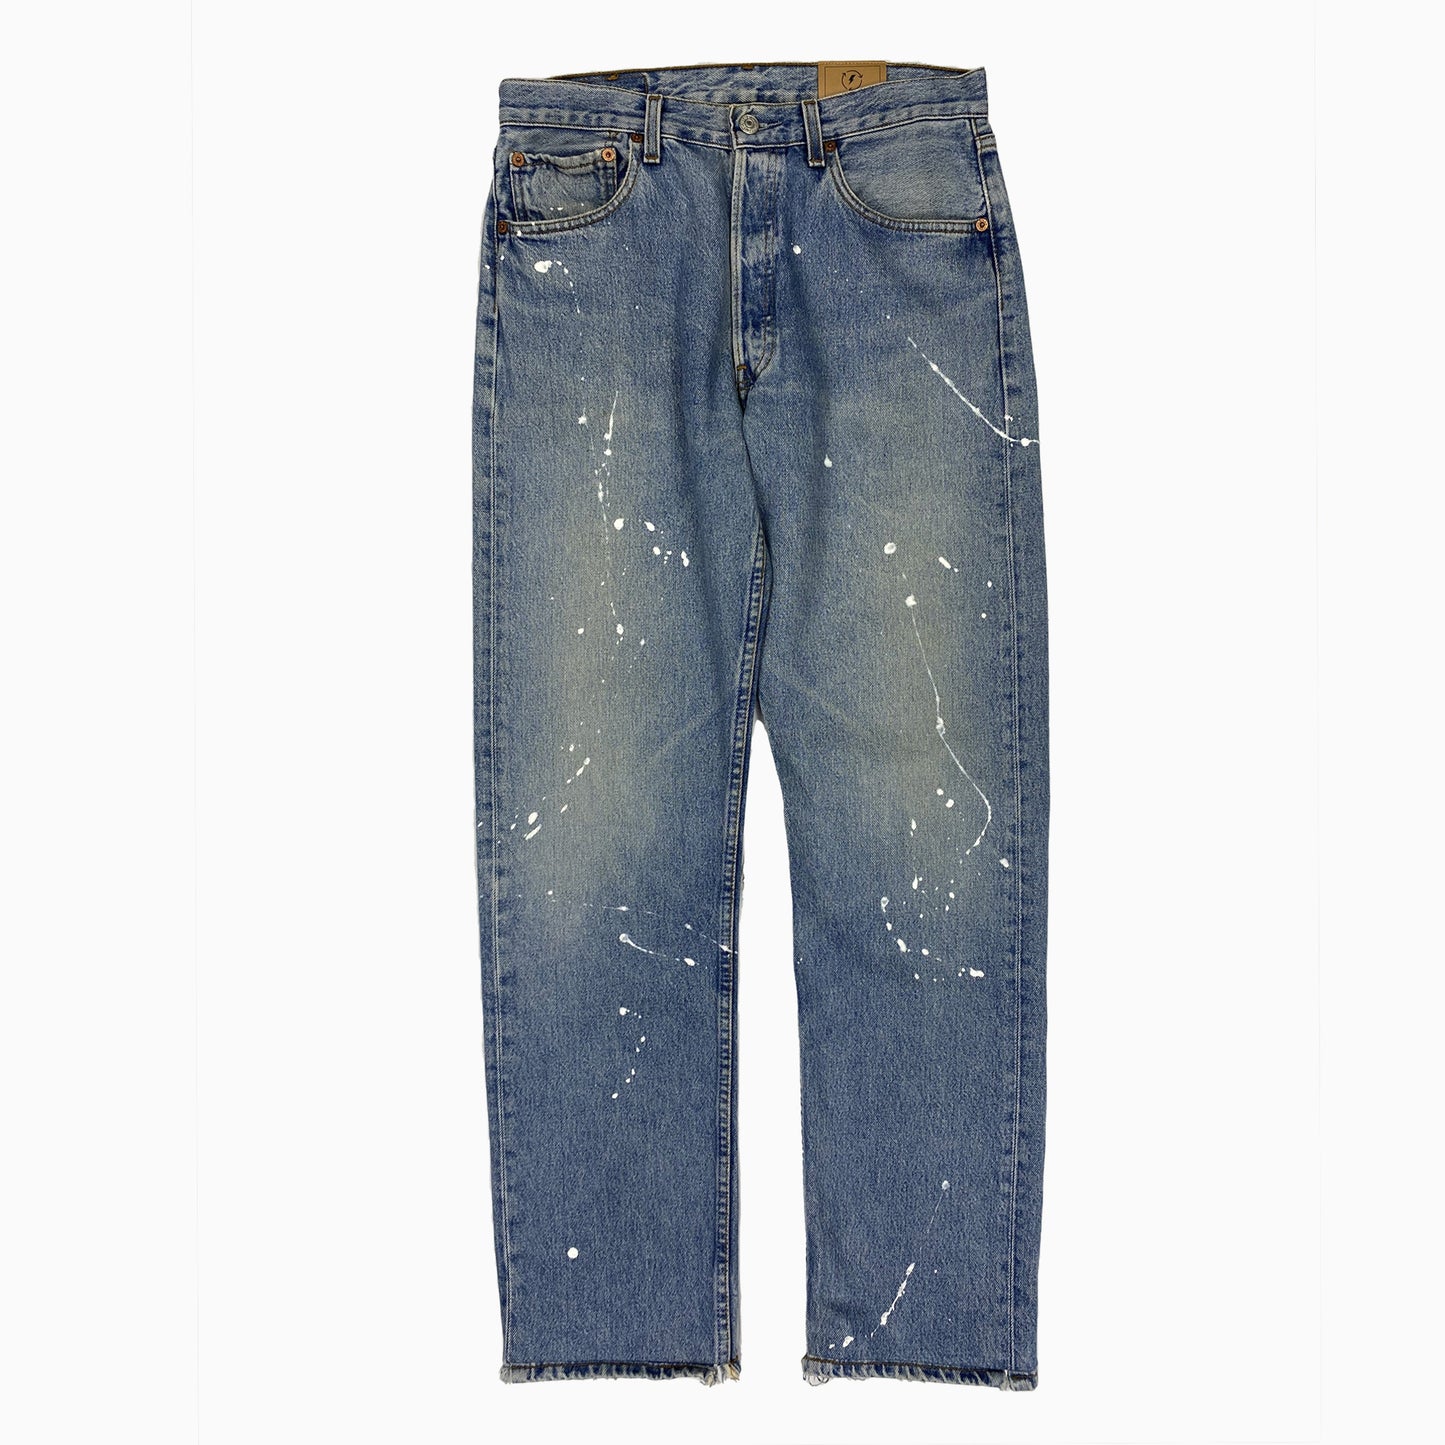 Levi's 501 Classic Paint Jeans (31 x 32) – denimfaygo